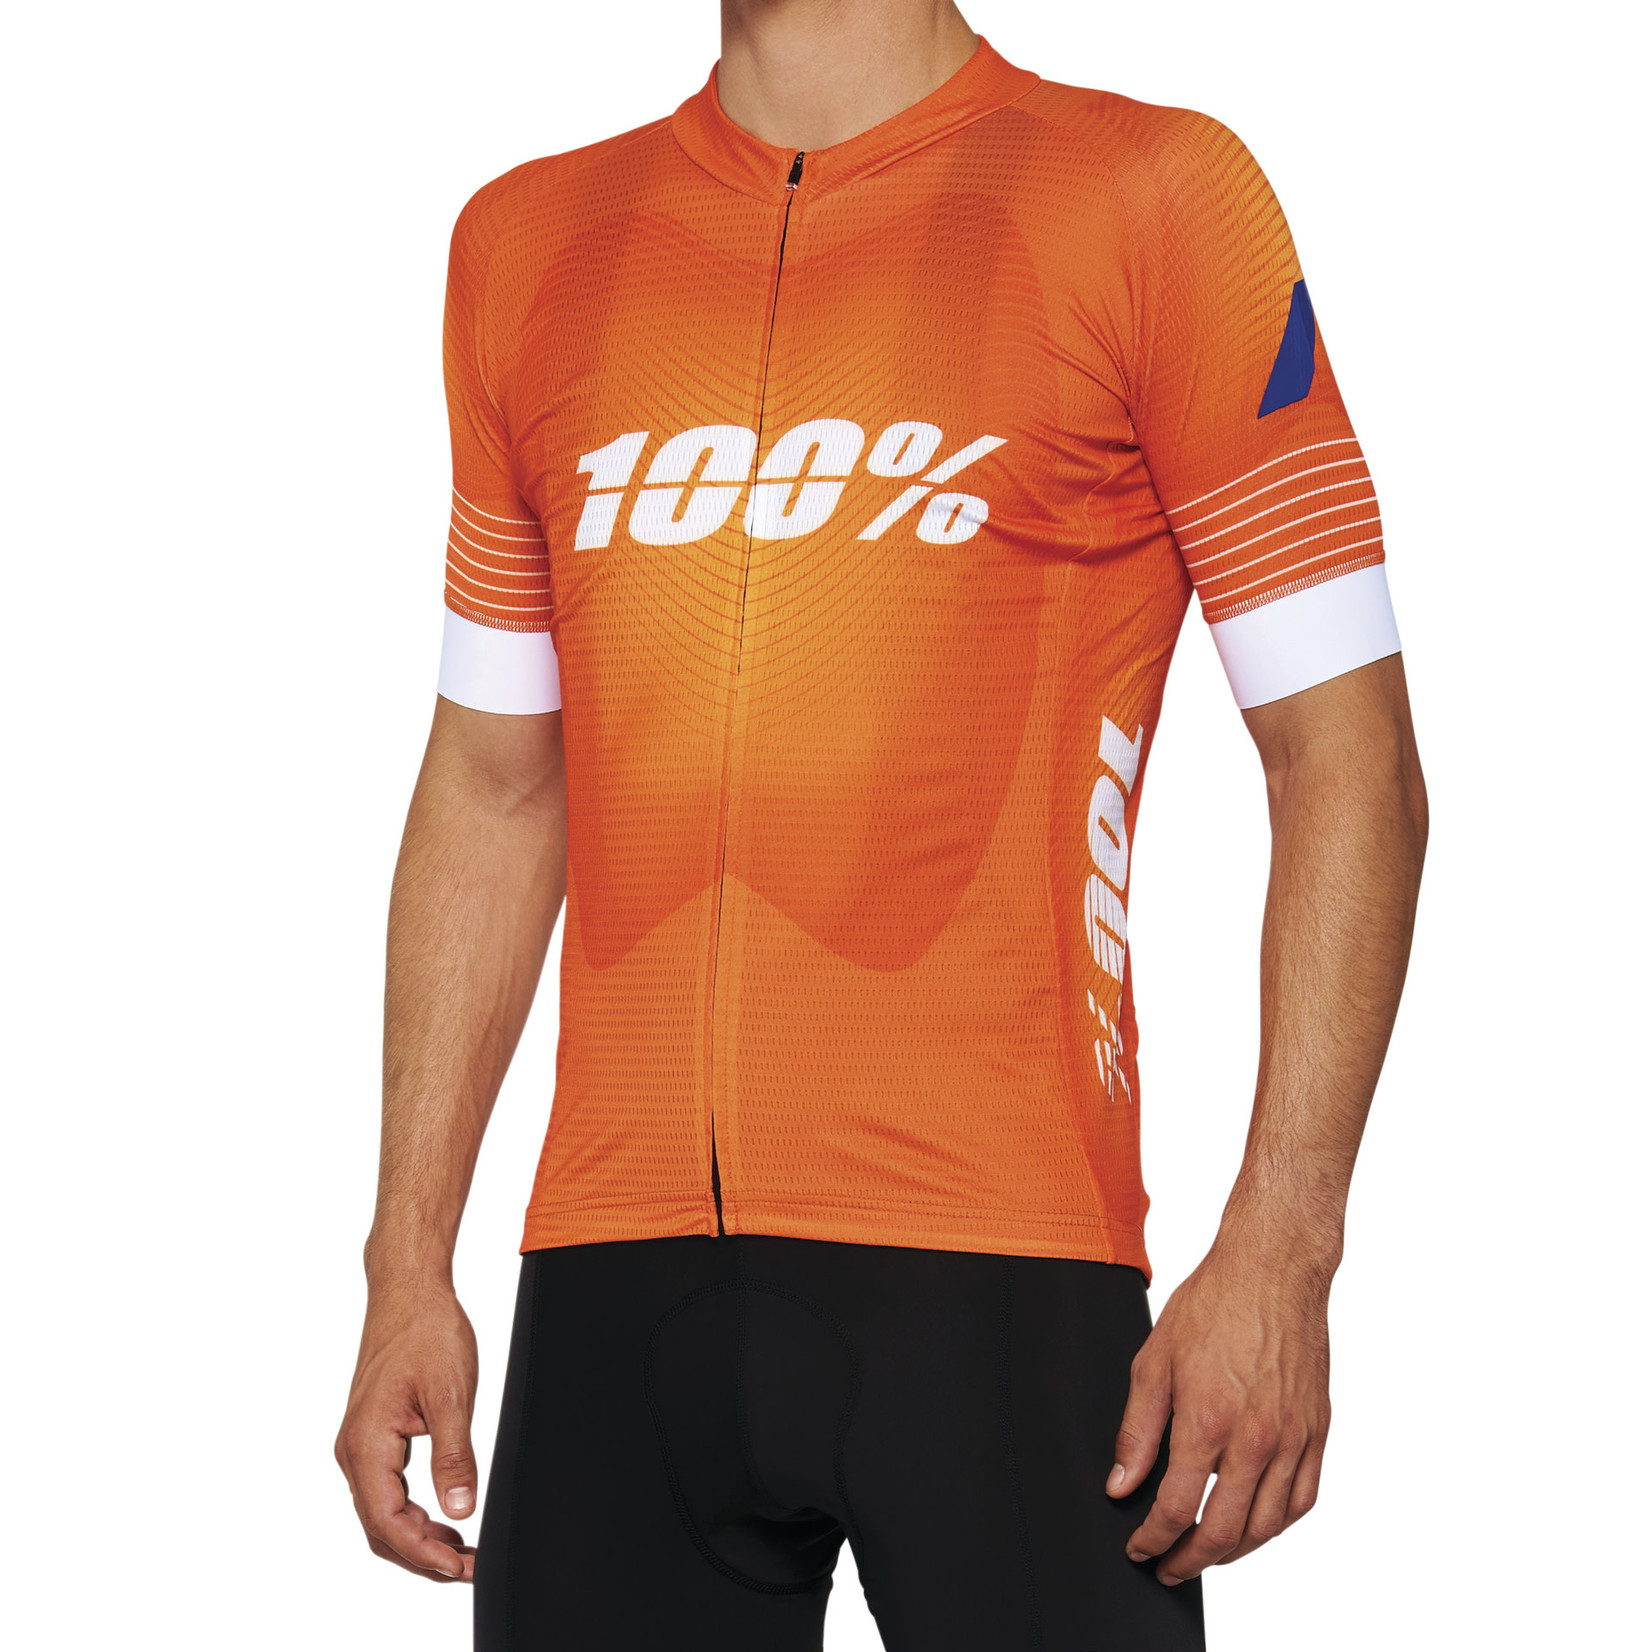 100 Percent 100% Exceeda Polyester/Spandex Bike/Cycling Jersey - Orange